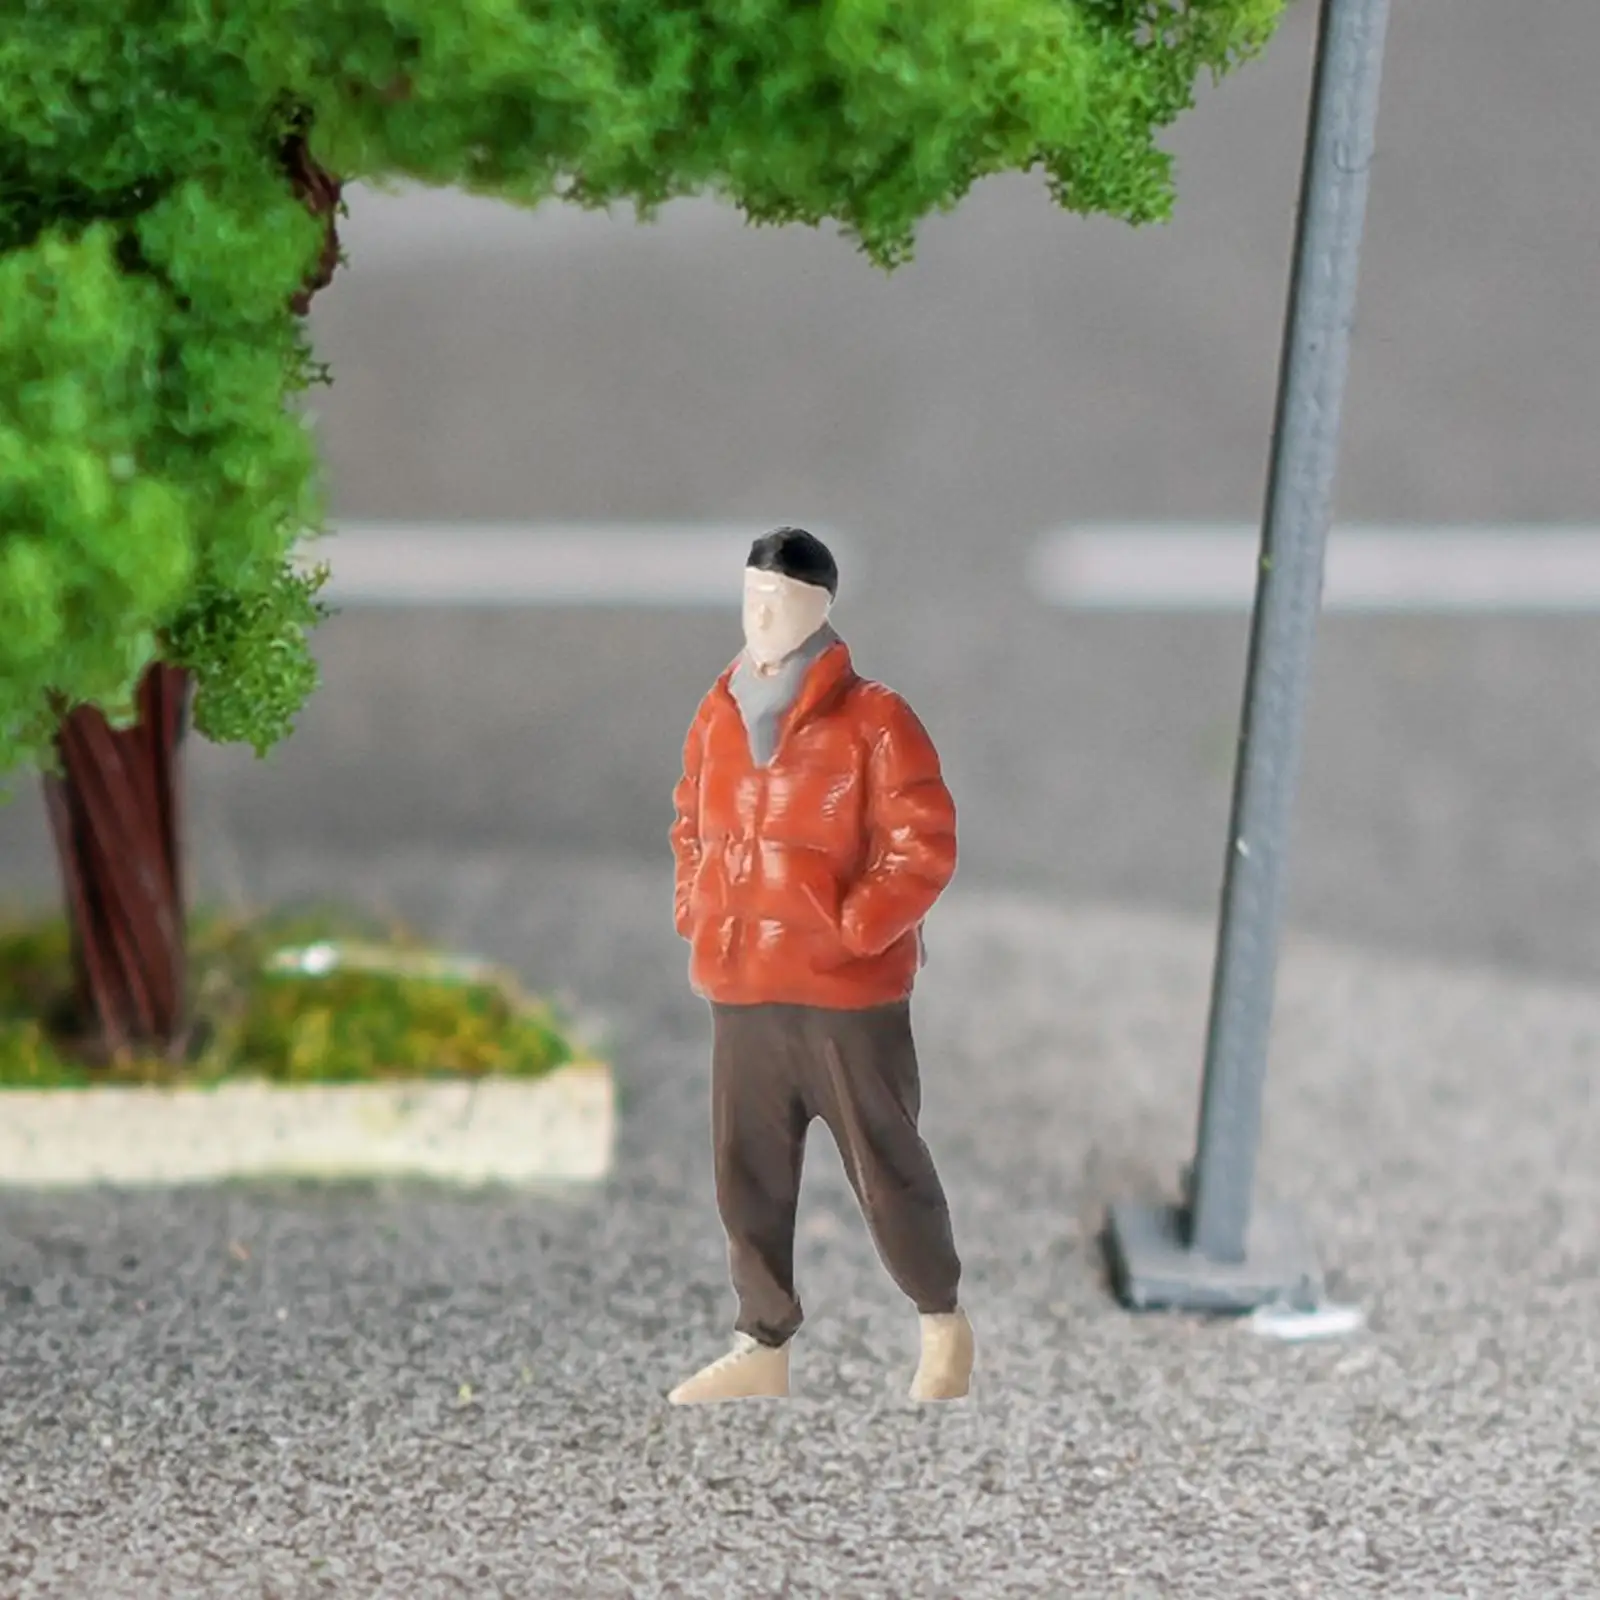 Hand Painted 1:64 Boy Figure Desktop Ornament Miniature Scenes Collections Micro Landscape Dioramas DIY Projects S Scale Decor